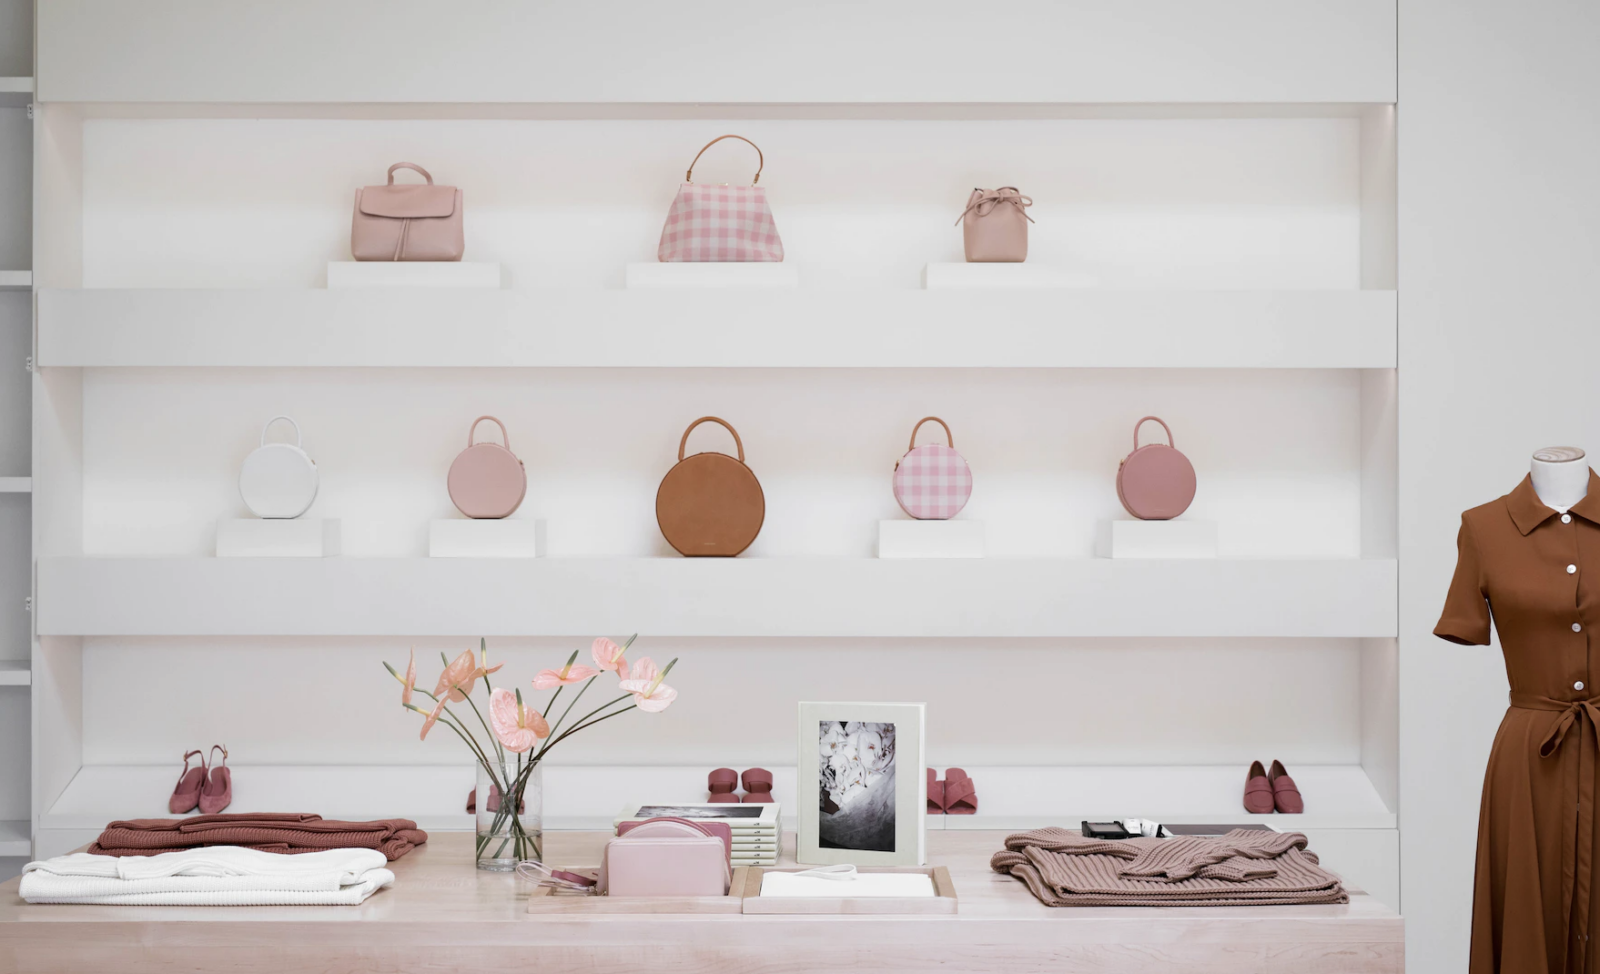 Handbags on a shelf